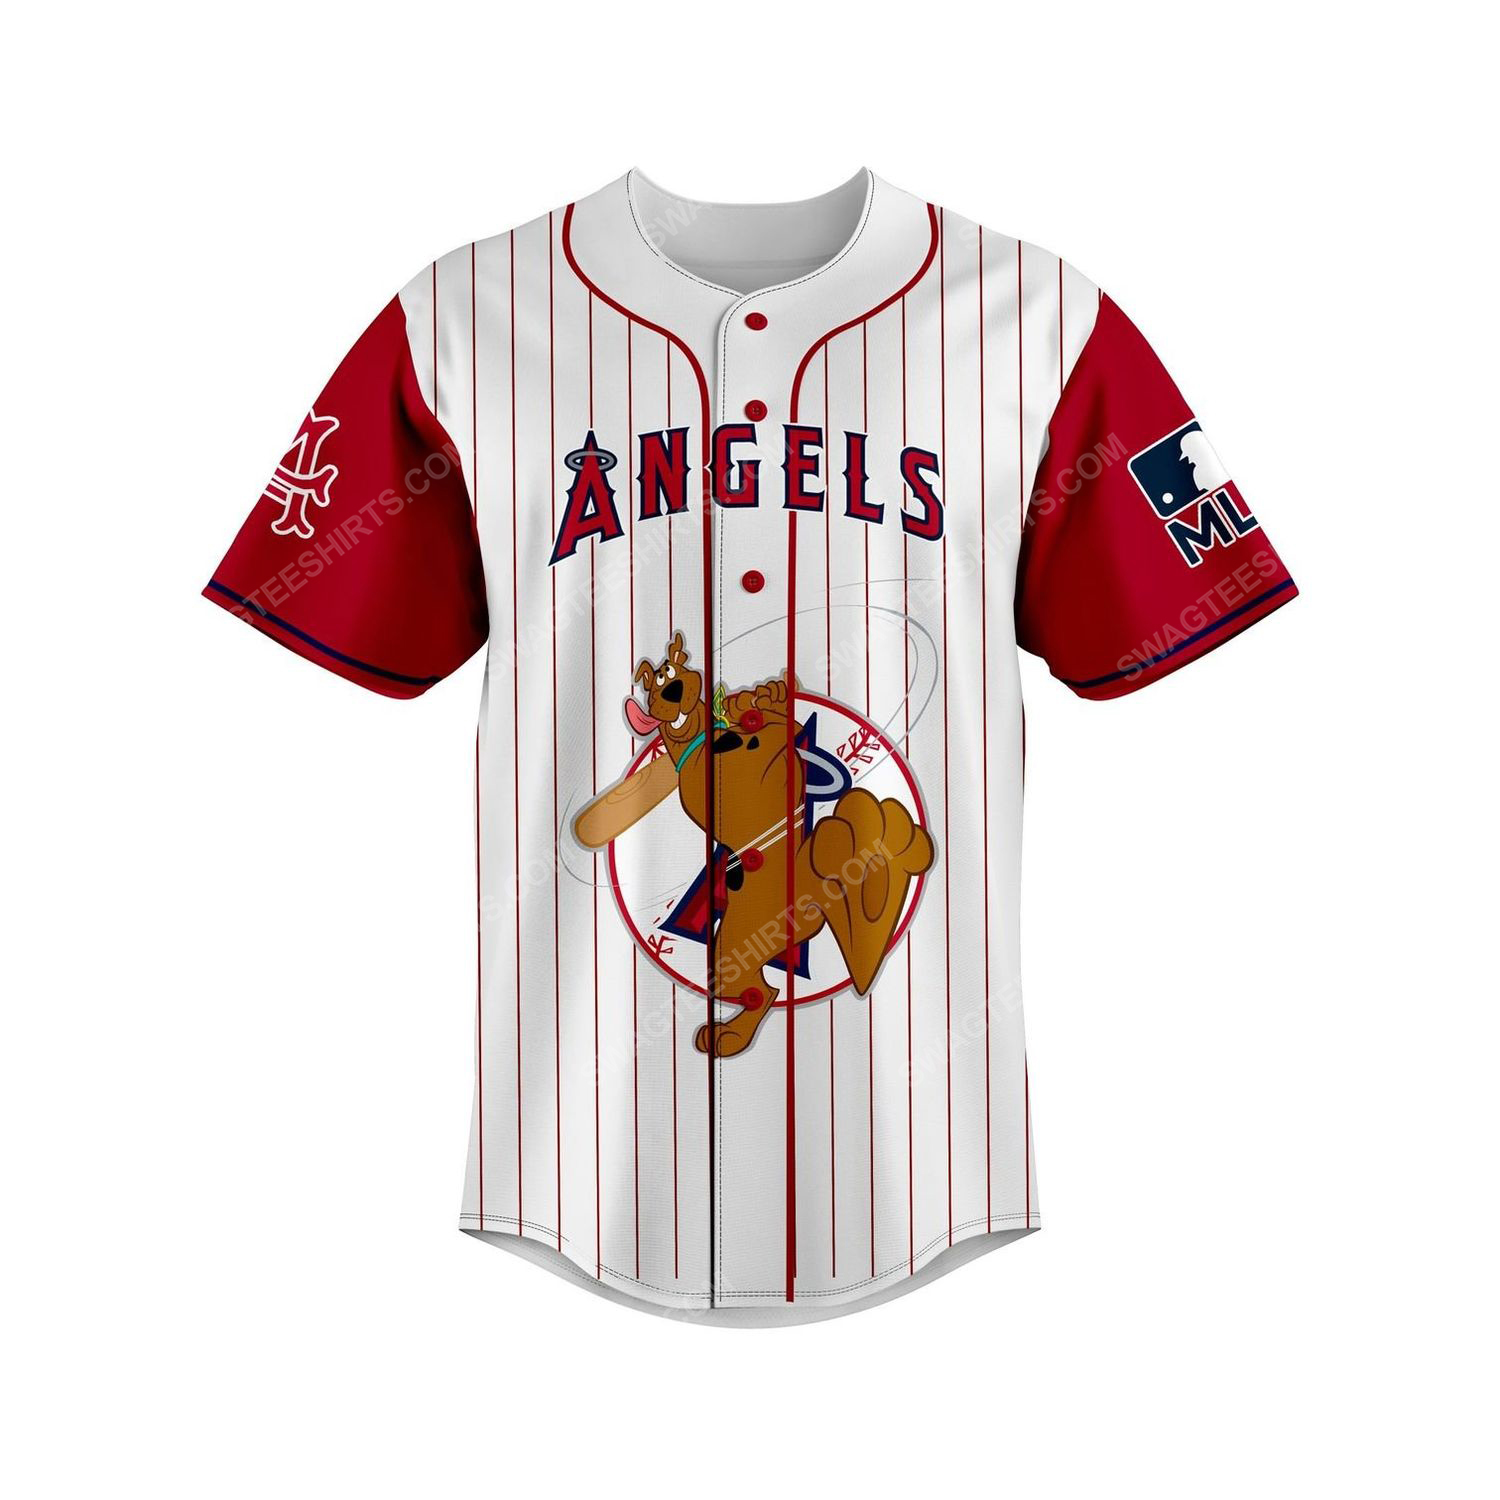 Custom scooby doo and los angeles angels baseball jersey 2 - Copy